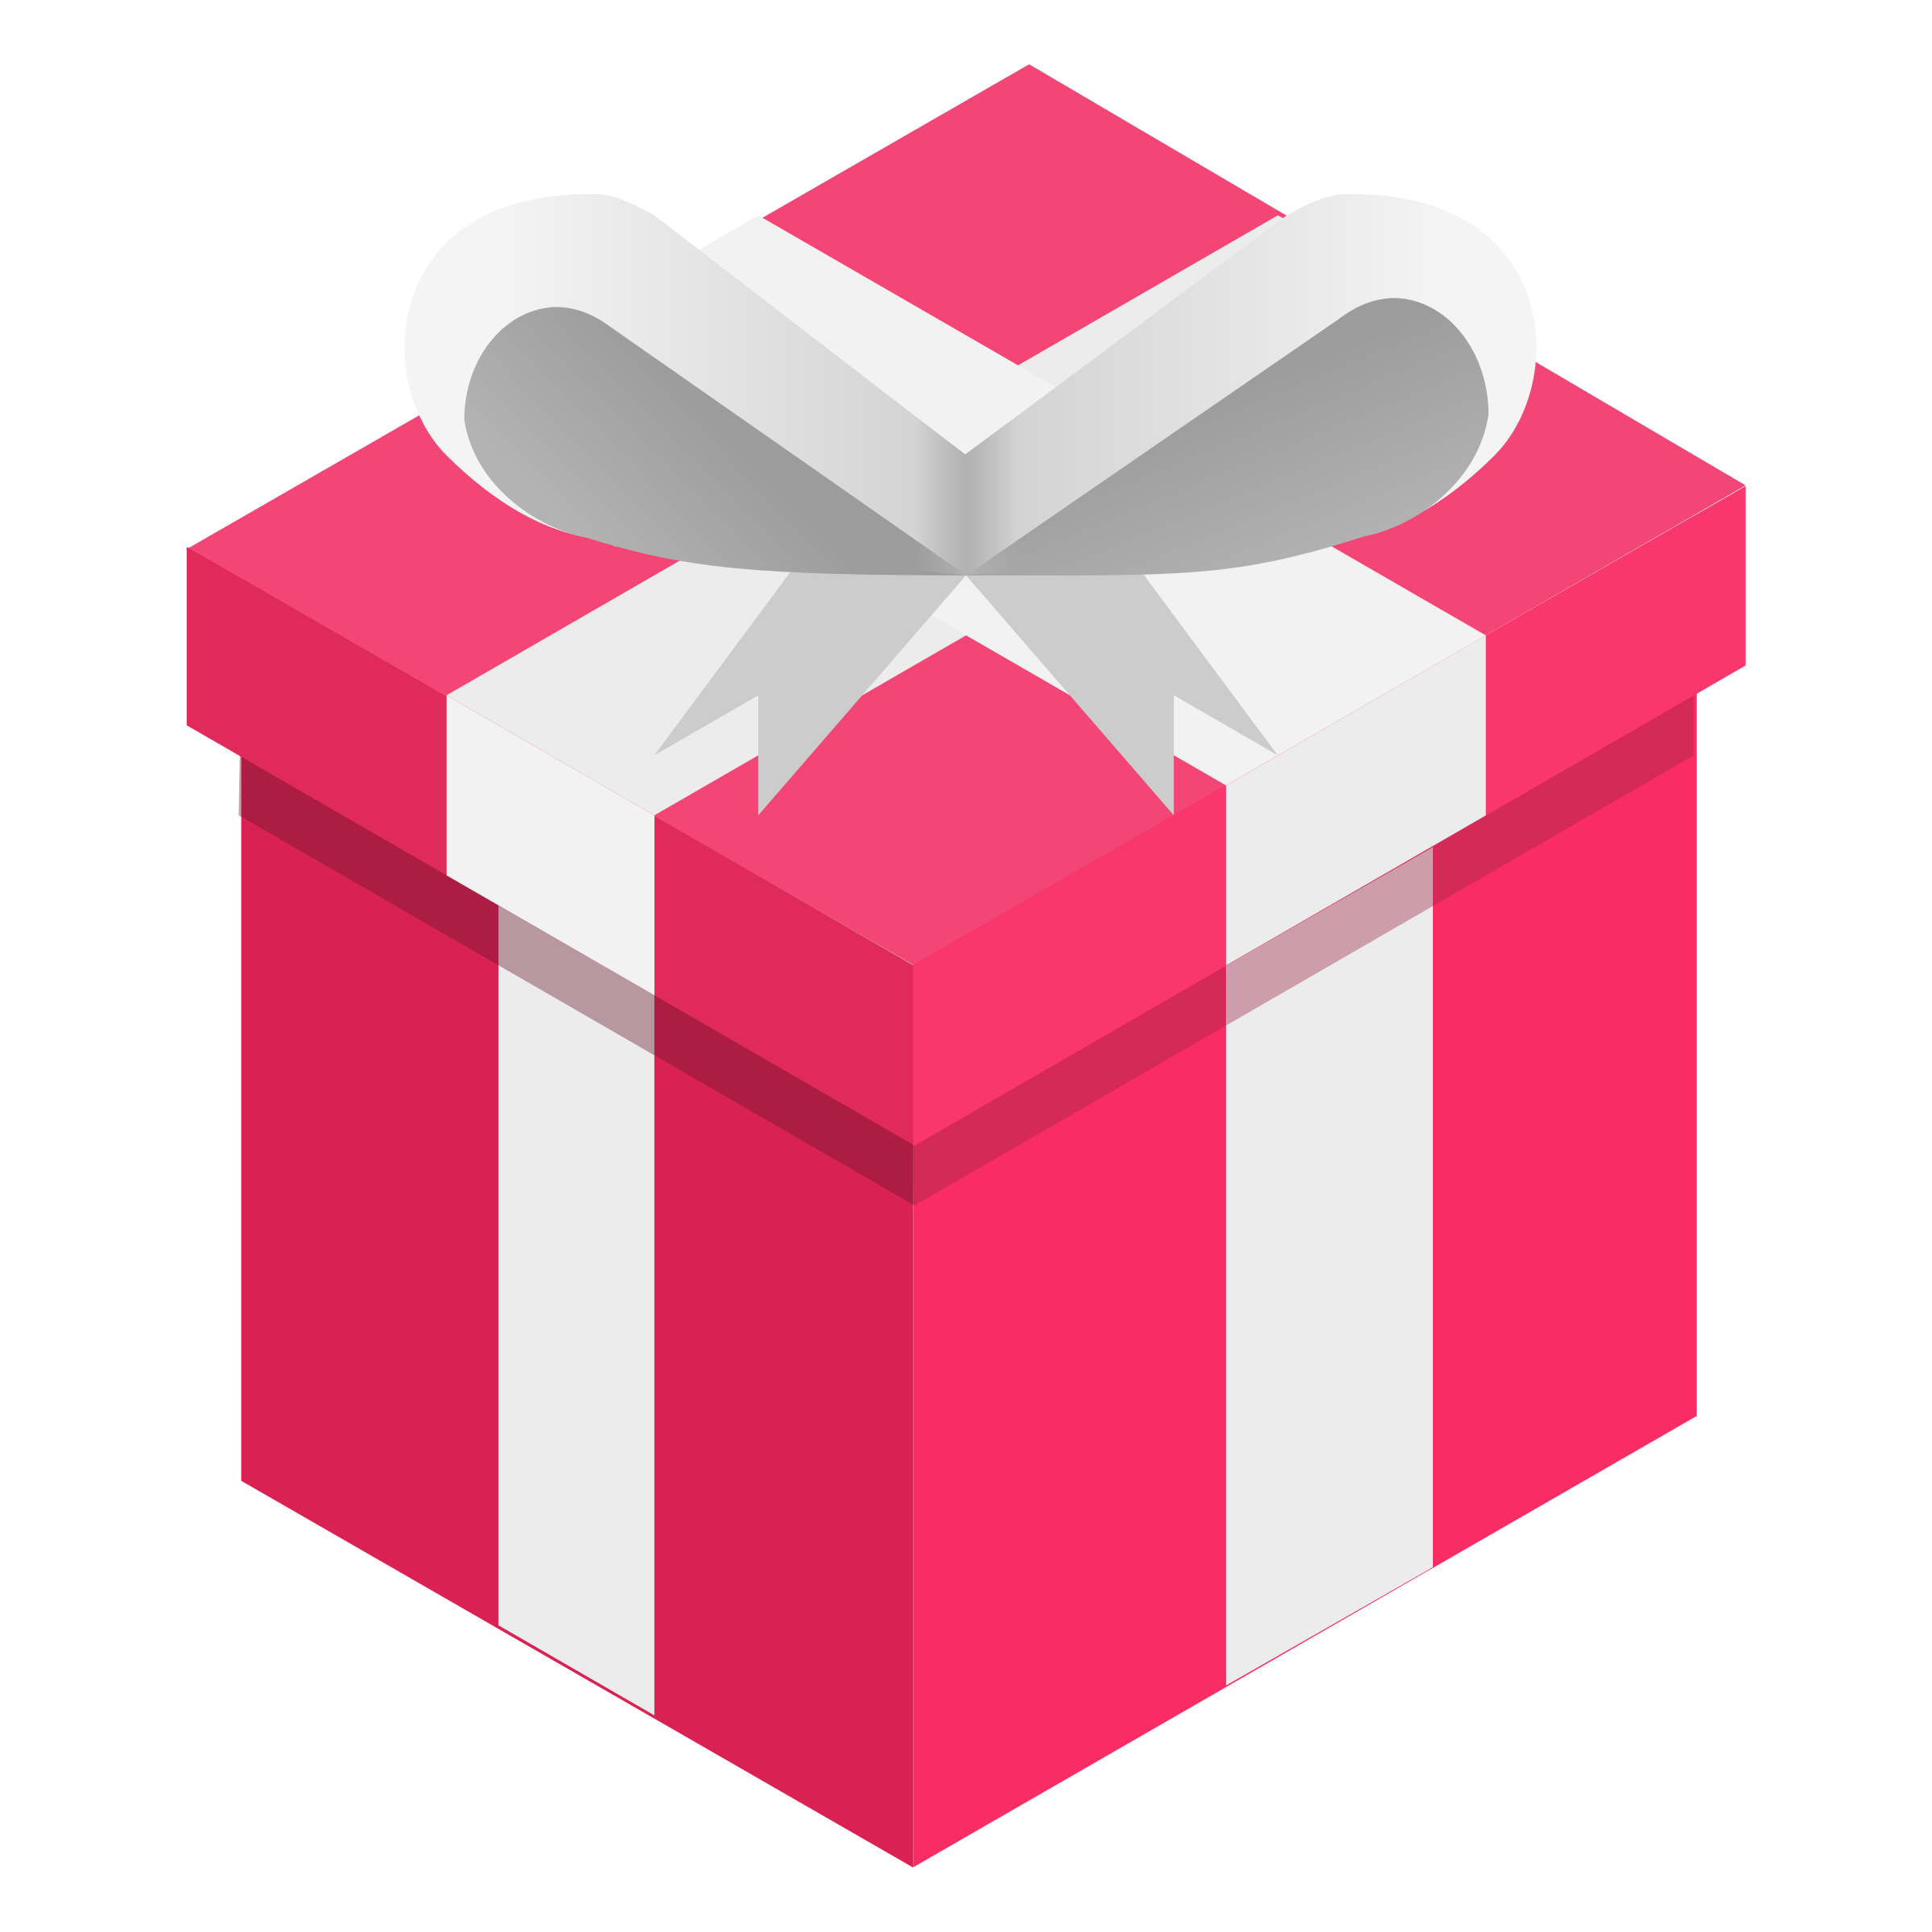 Gift clipart 3 gift. Box panda free images